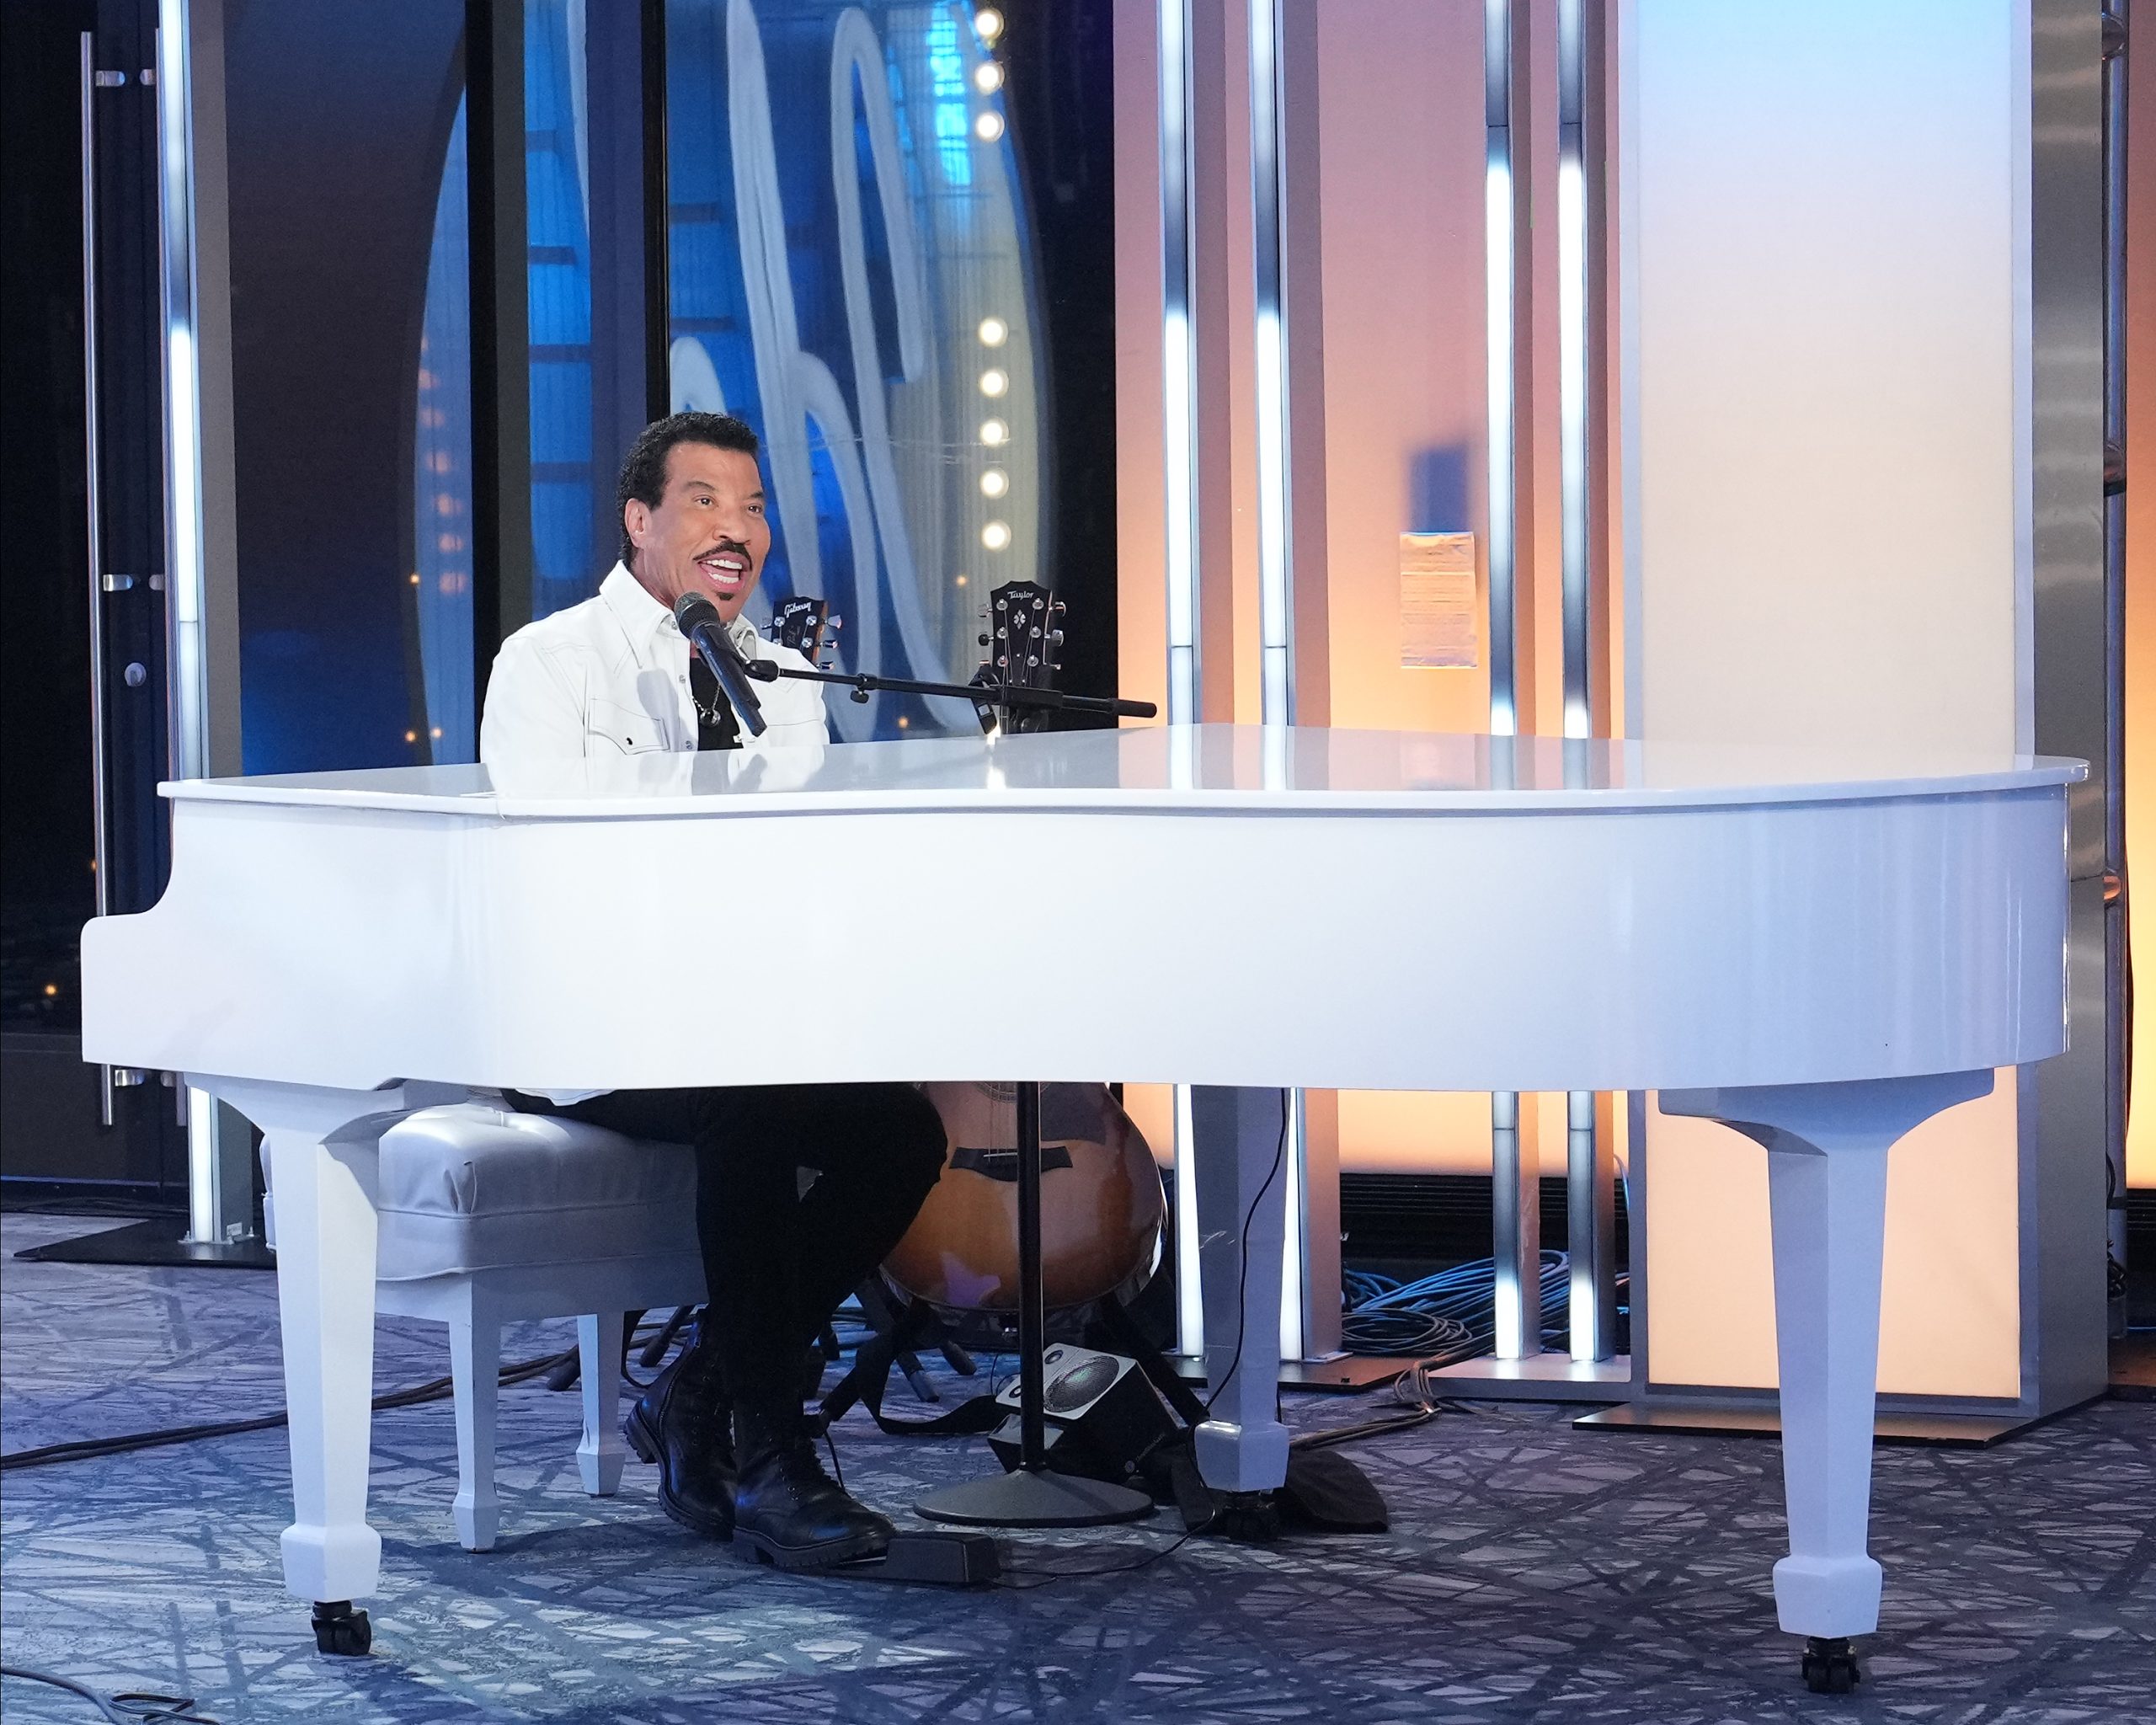 LIONEL RICHIE on American Idol